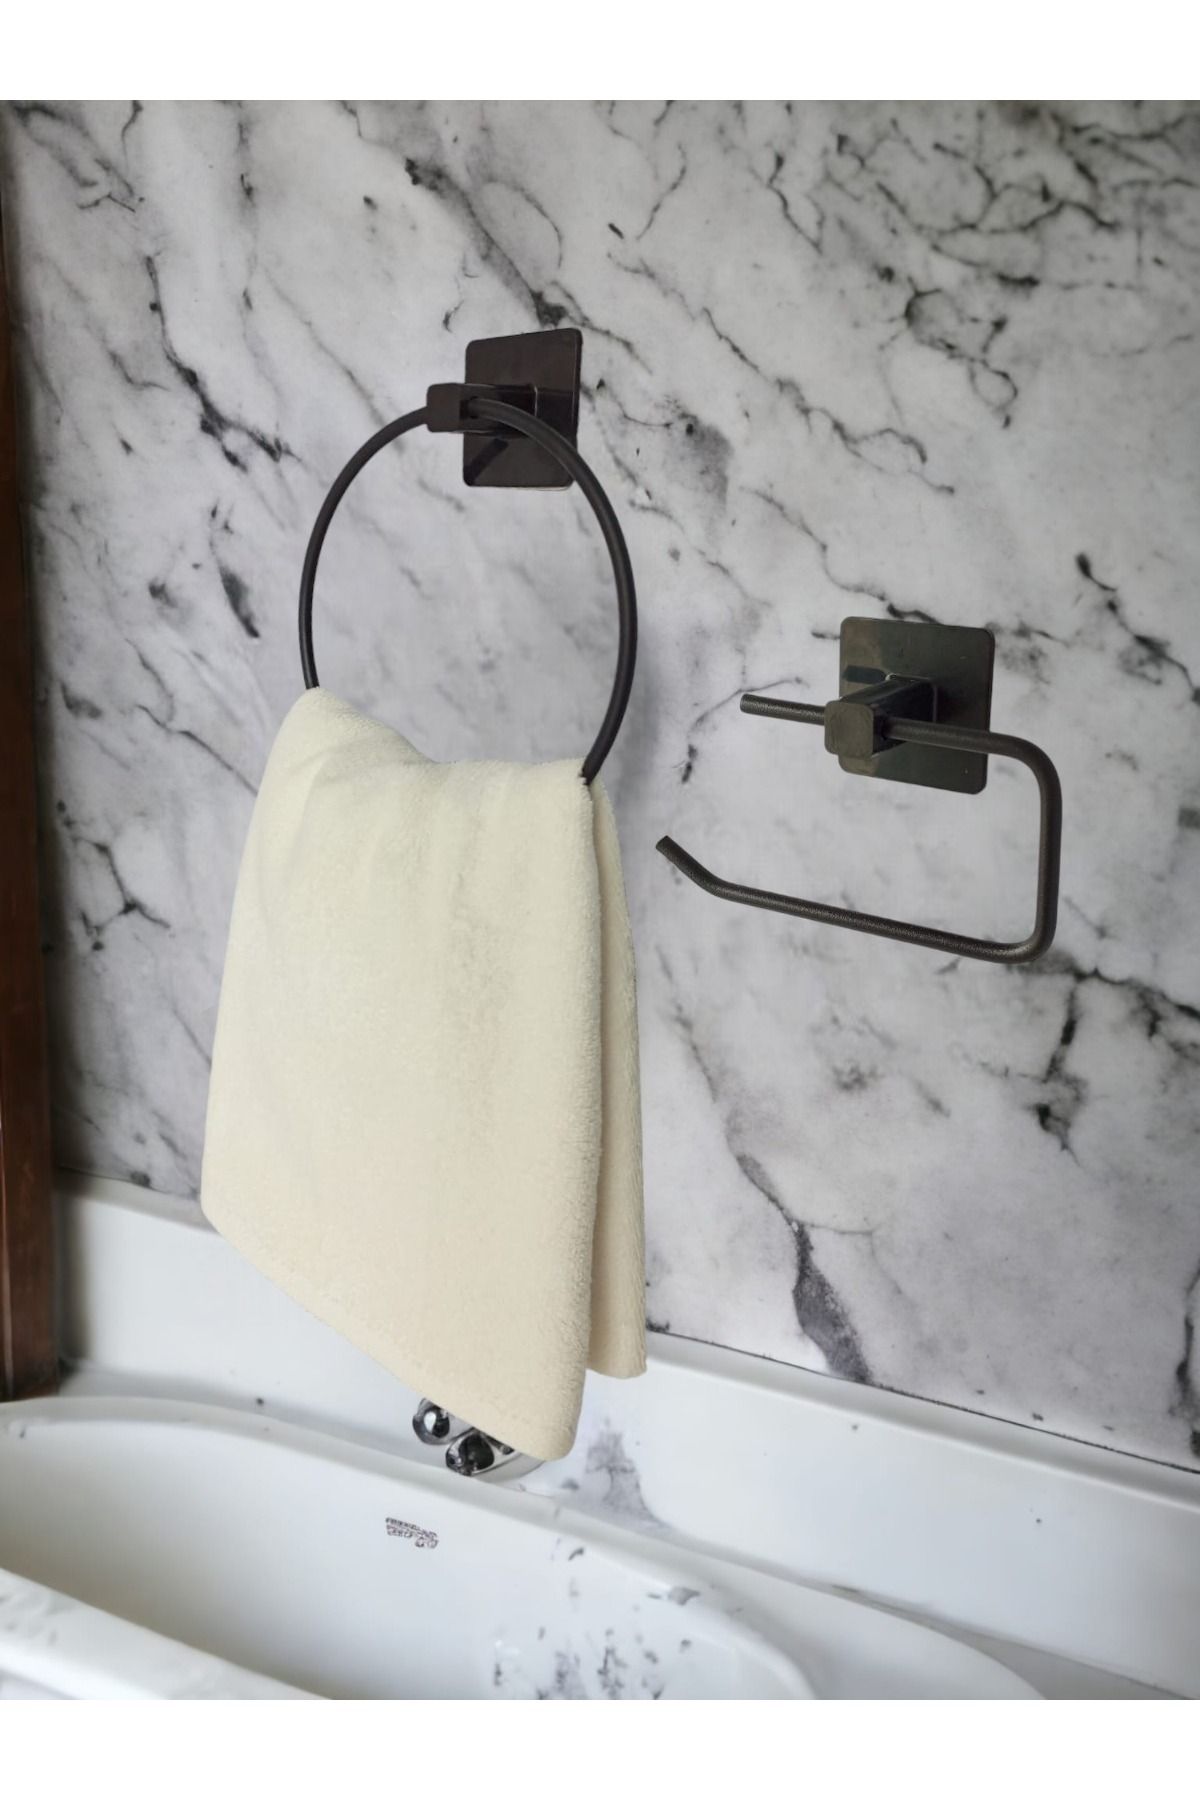 Egem Home Yapışkanlı Banyo Aksesuar Seti Yuvarlak Havluluk Kapaksız Tuvalet Kağıtlığı